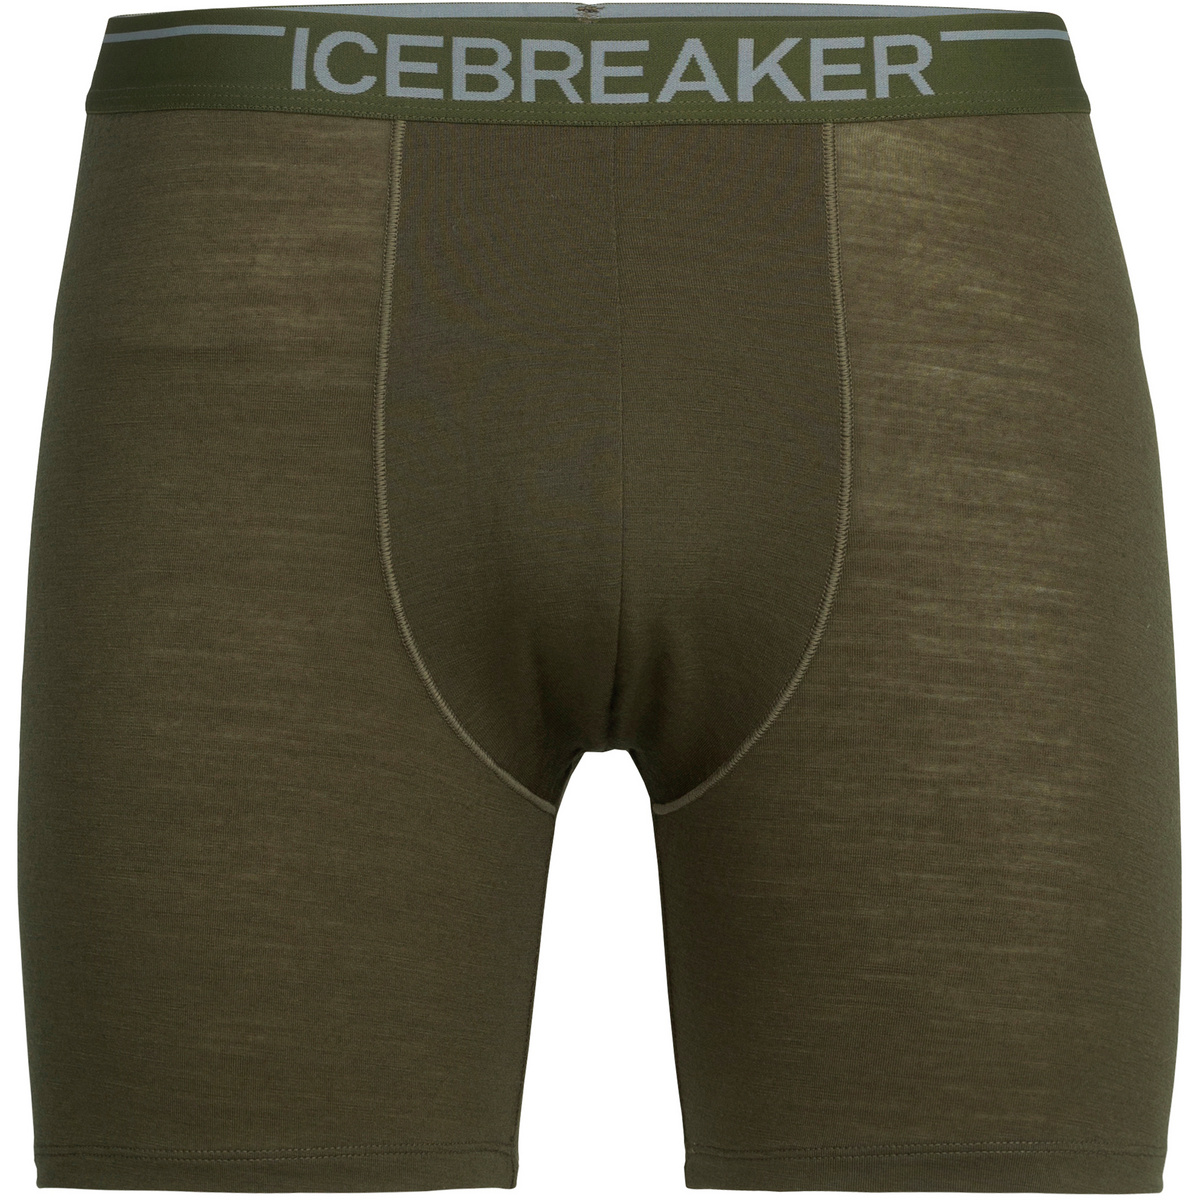 Image of Icebreaker Uomo Boxer Anatomica Long